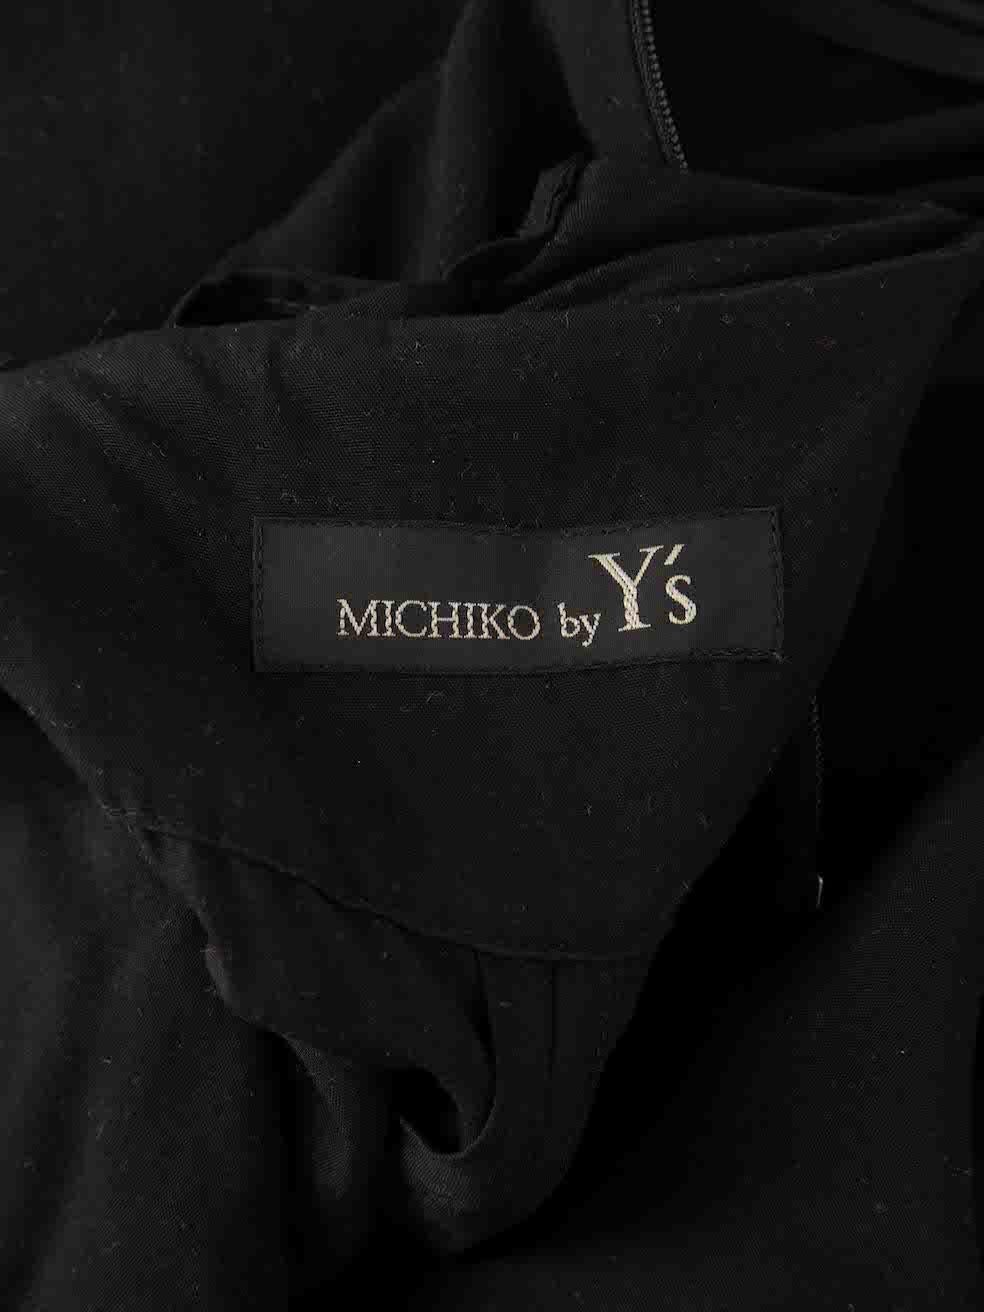 Women's Yohji Yamamoto Michiko by Y's Black Lace Up Back Jumpsuit Size S For Sale